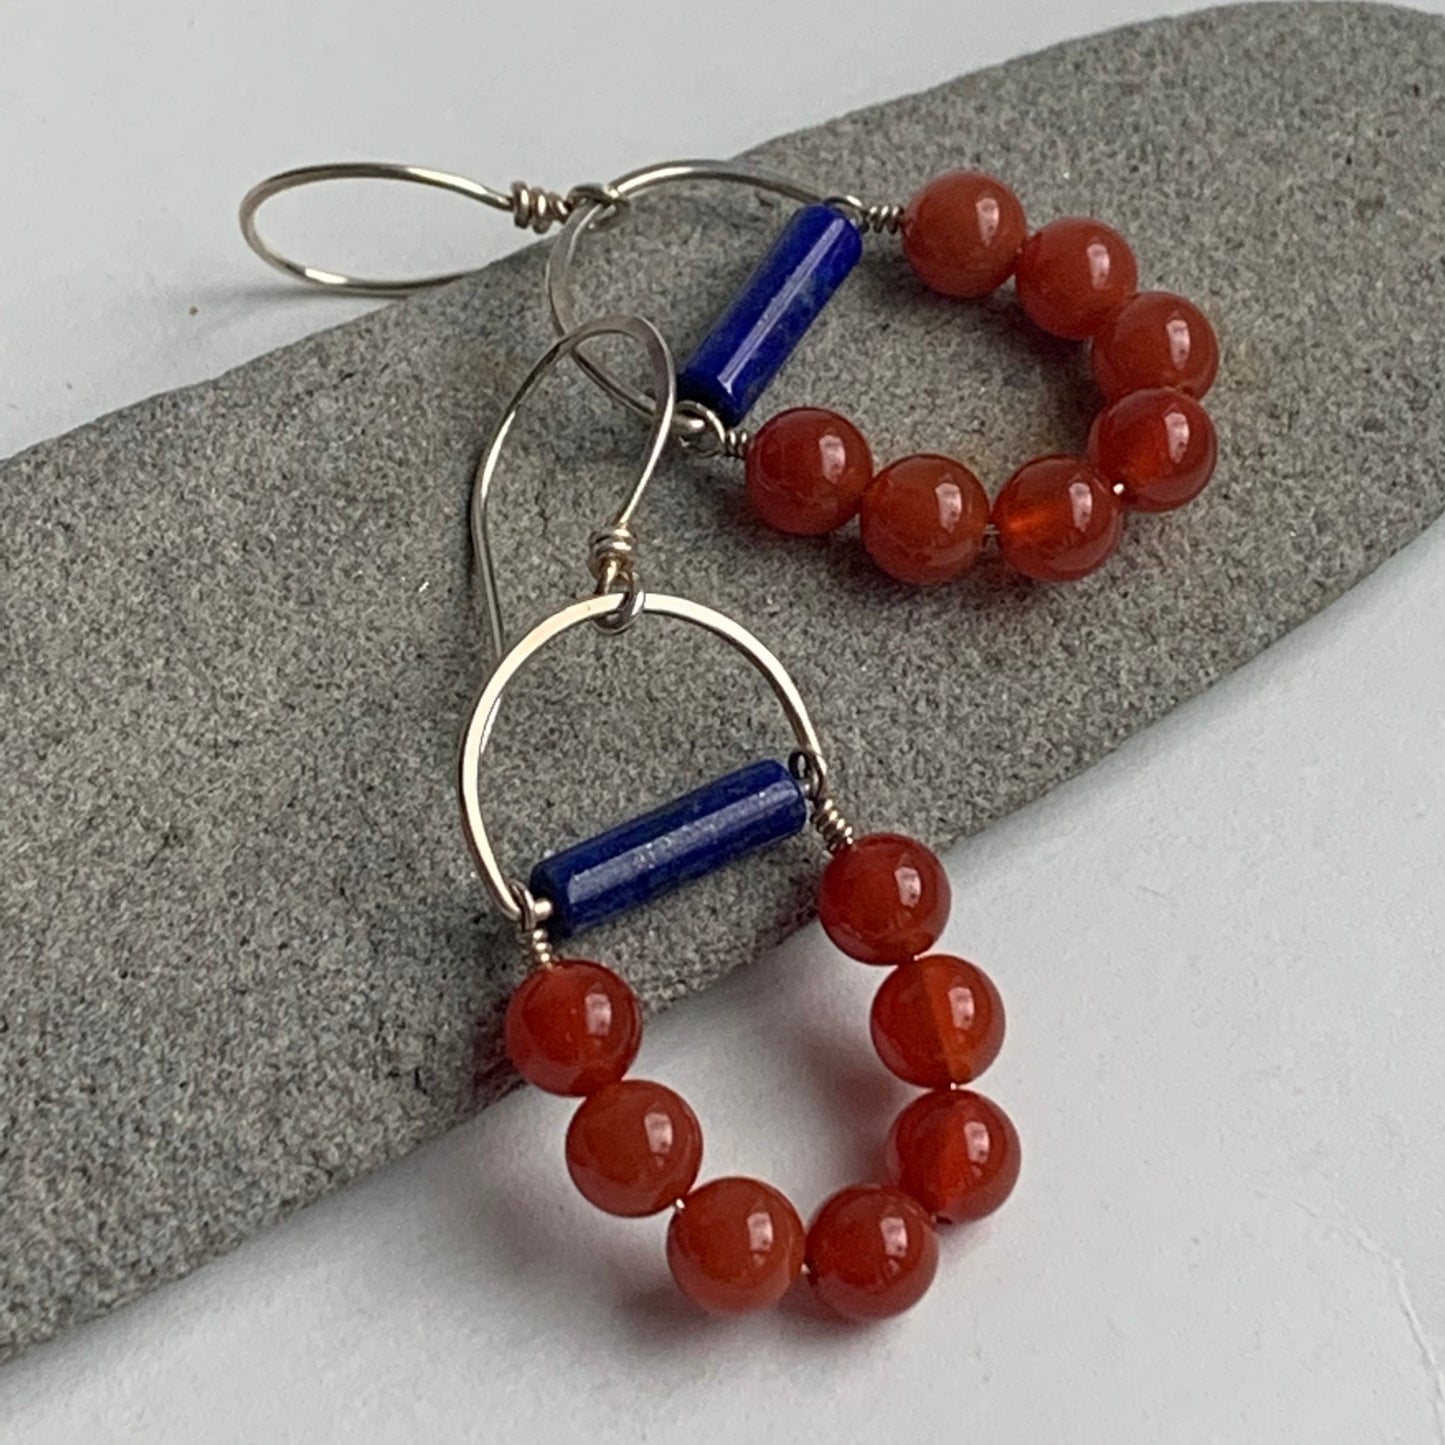 Carnelian and lapis earrings - boho style beaded jewelry - gifts for yoga moms - healing gemstones - chakra balance - earthy handmade